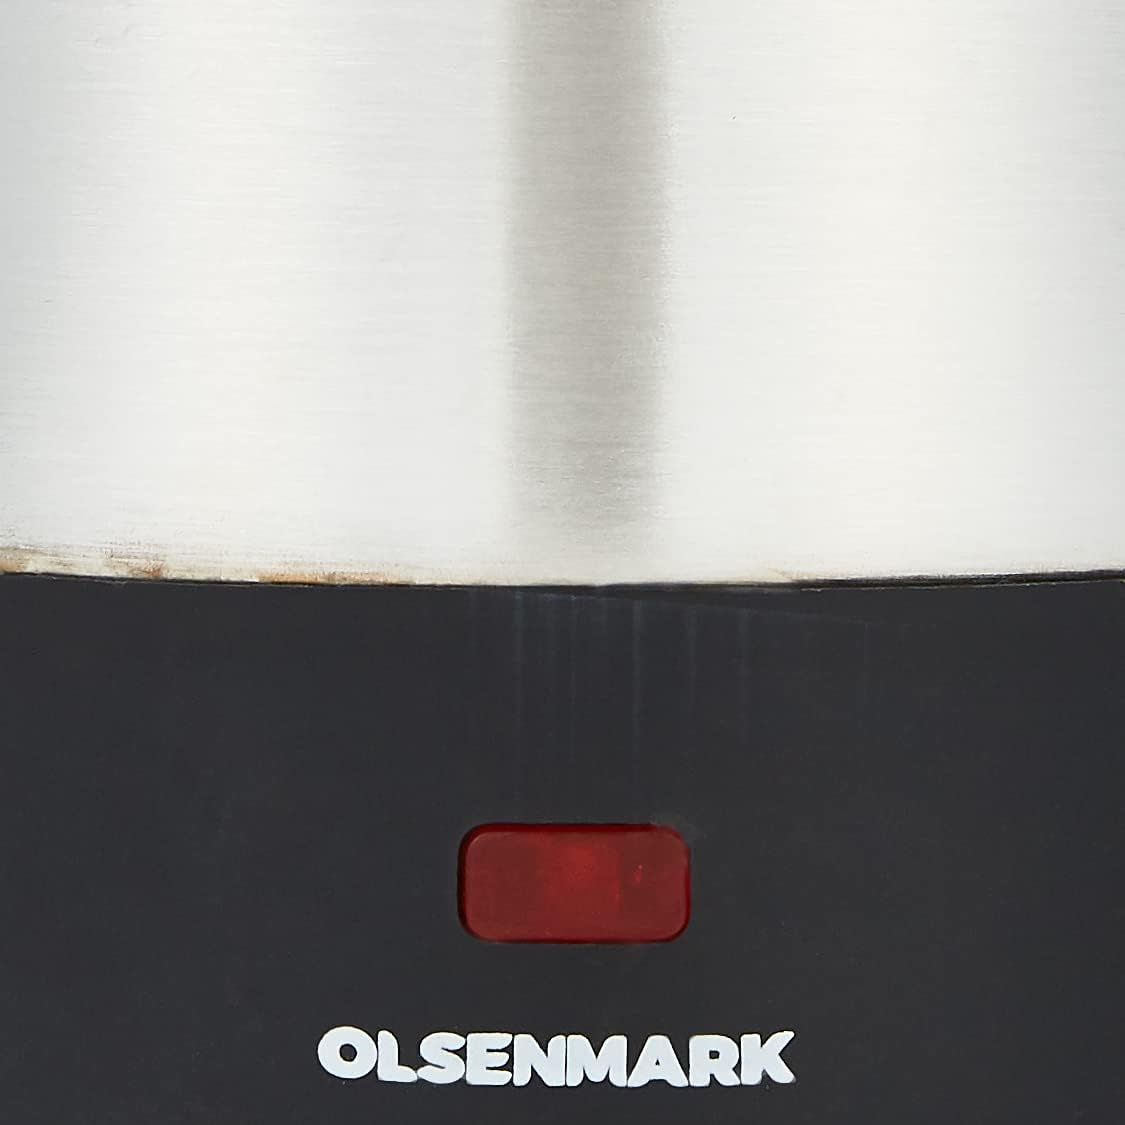 Olsenmark Electric Kettle, 0.5L Auto Shutoff On Boiling Safety Lock غلاية كهربائية من الستانلس ستيل من اولسينمارك، 0.5 لتر